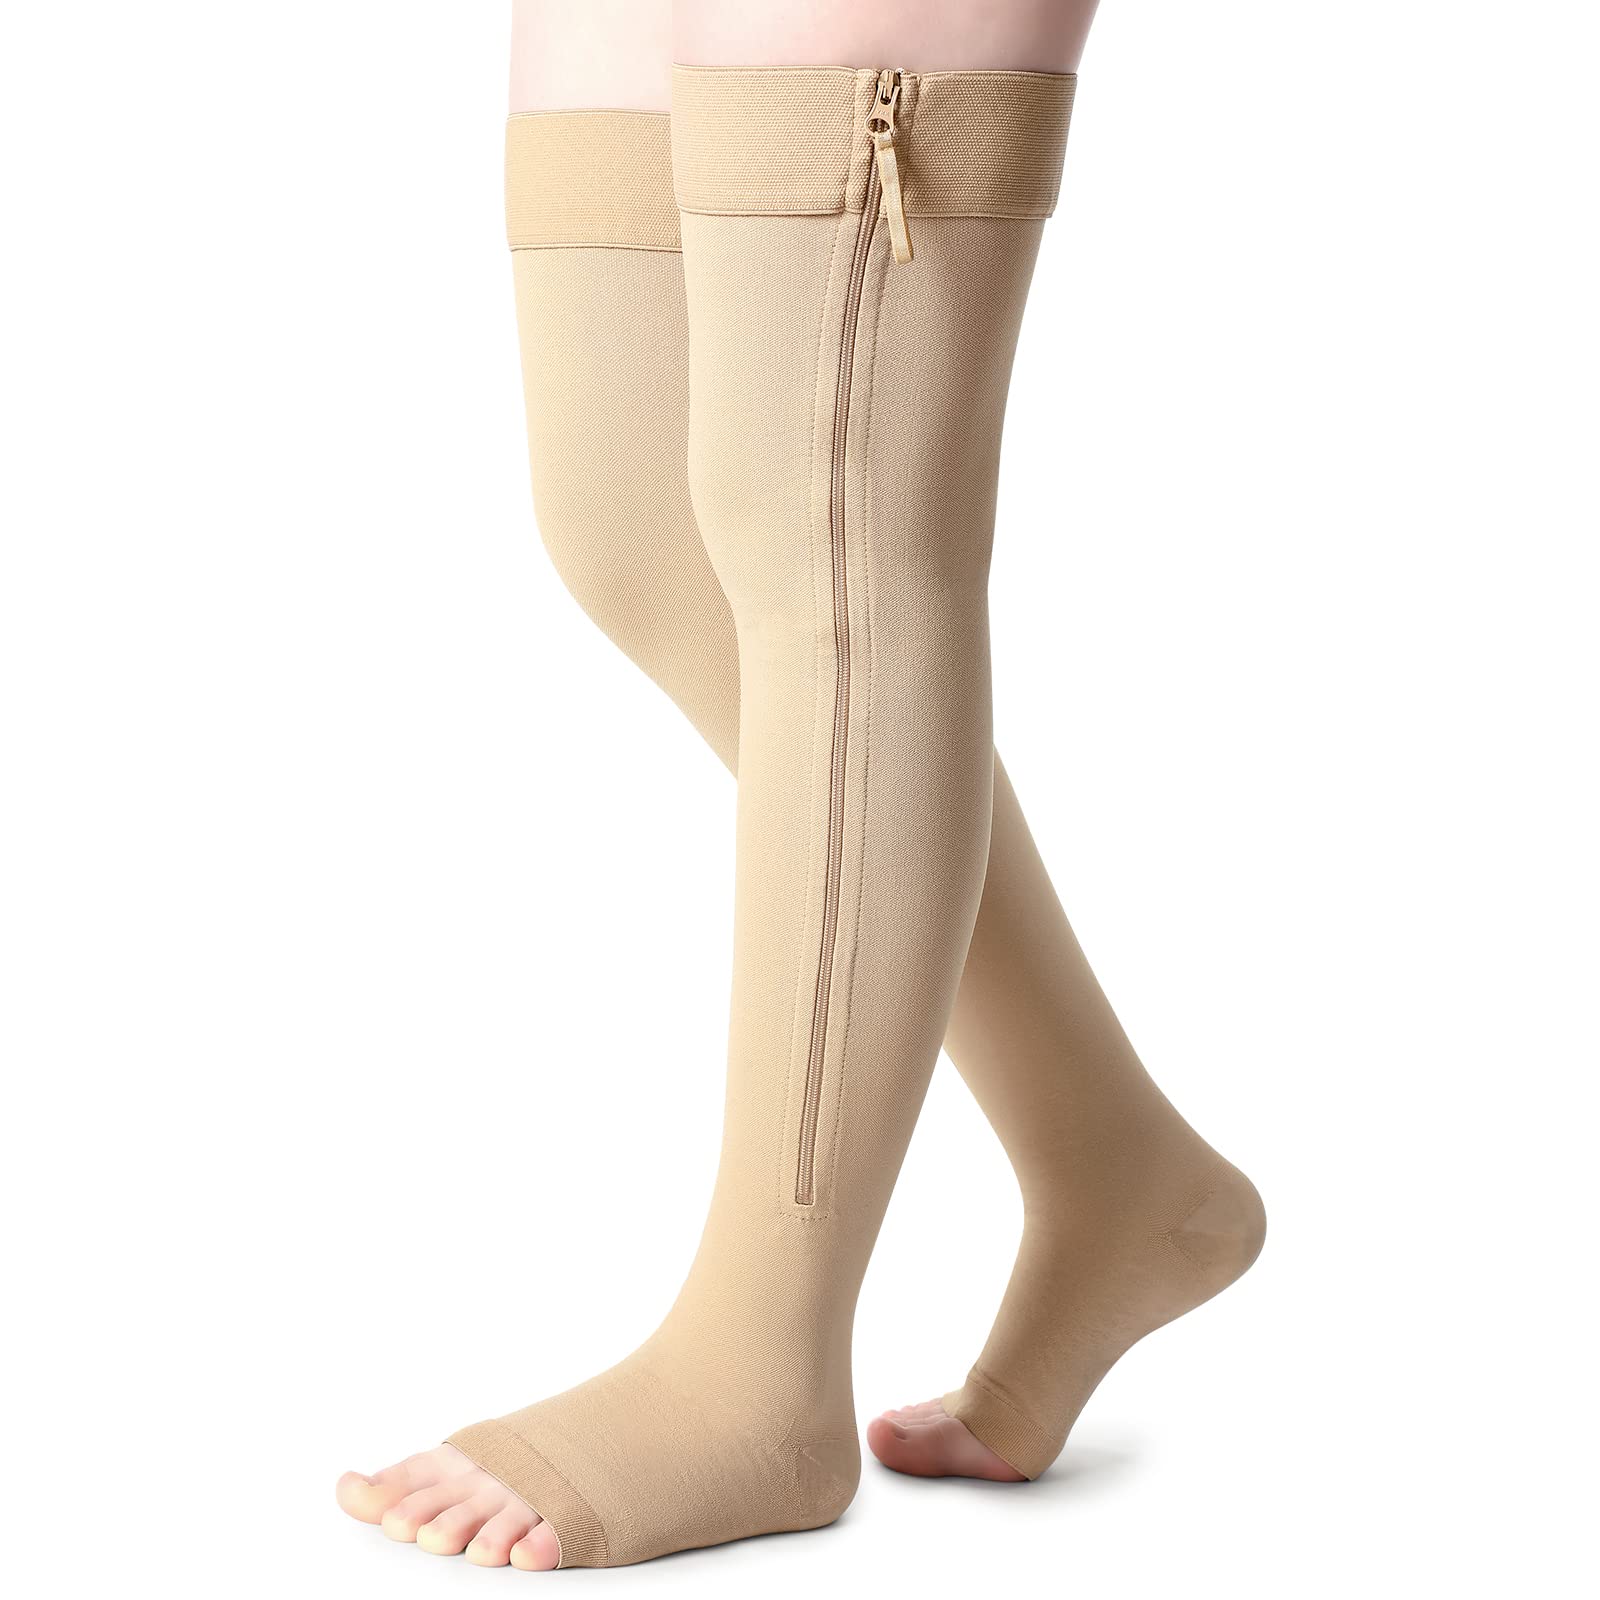 Zipper Compression Socks Stockings 20-30mmHg Sport Varicose Veins